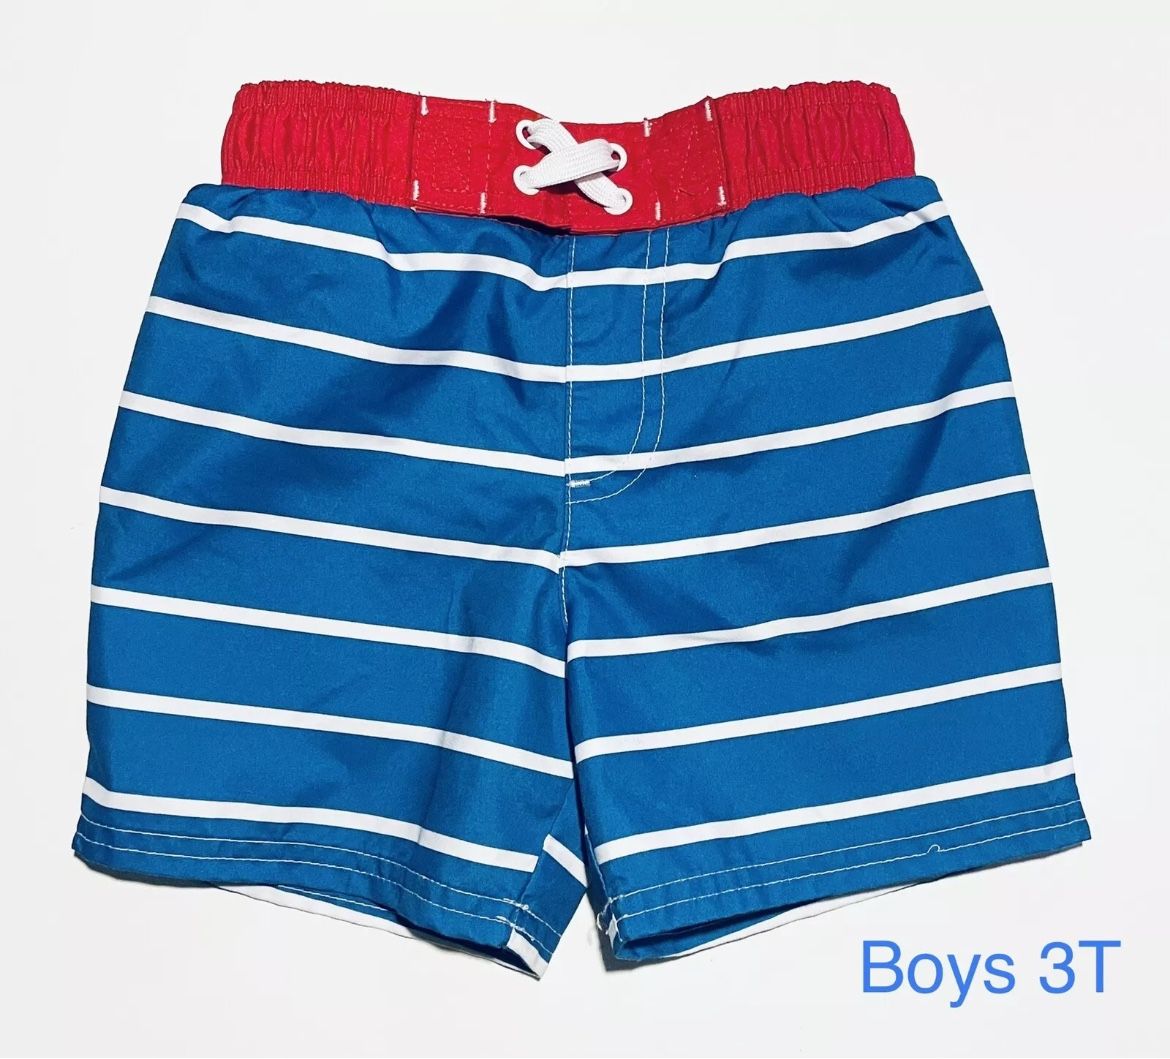 Cat & Jack Swim Shorts Red/Blue White Stripe Boys 3T, SMOKE FREE!